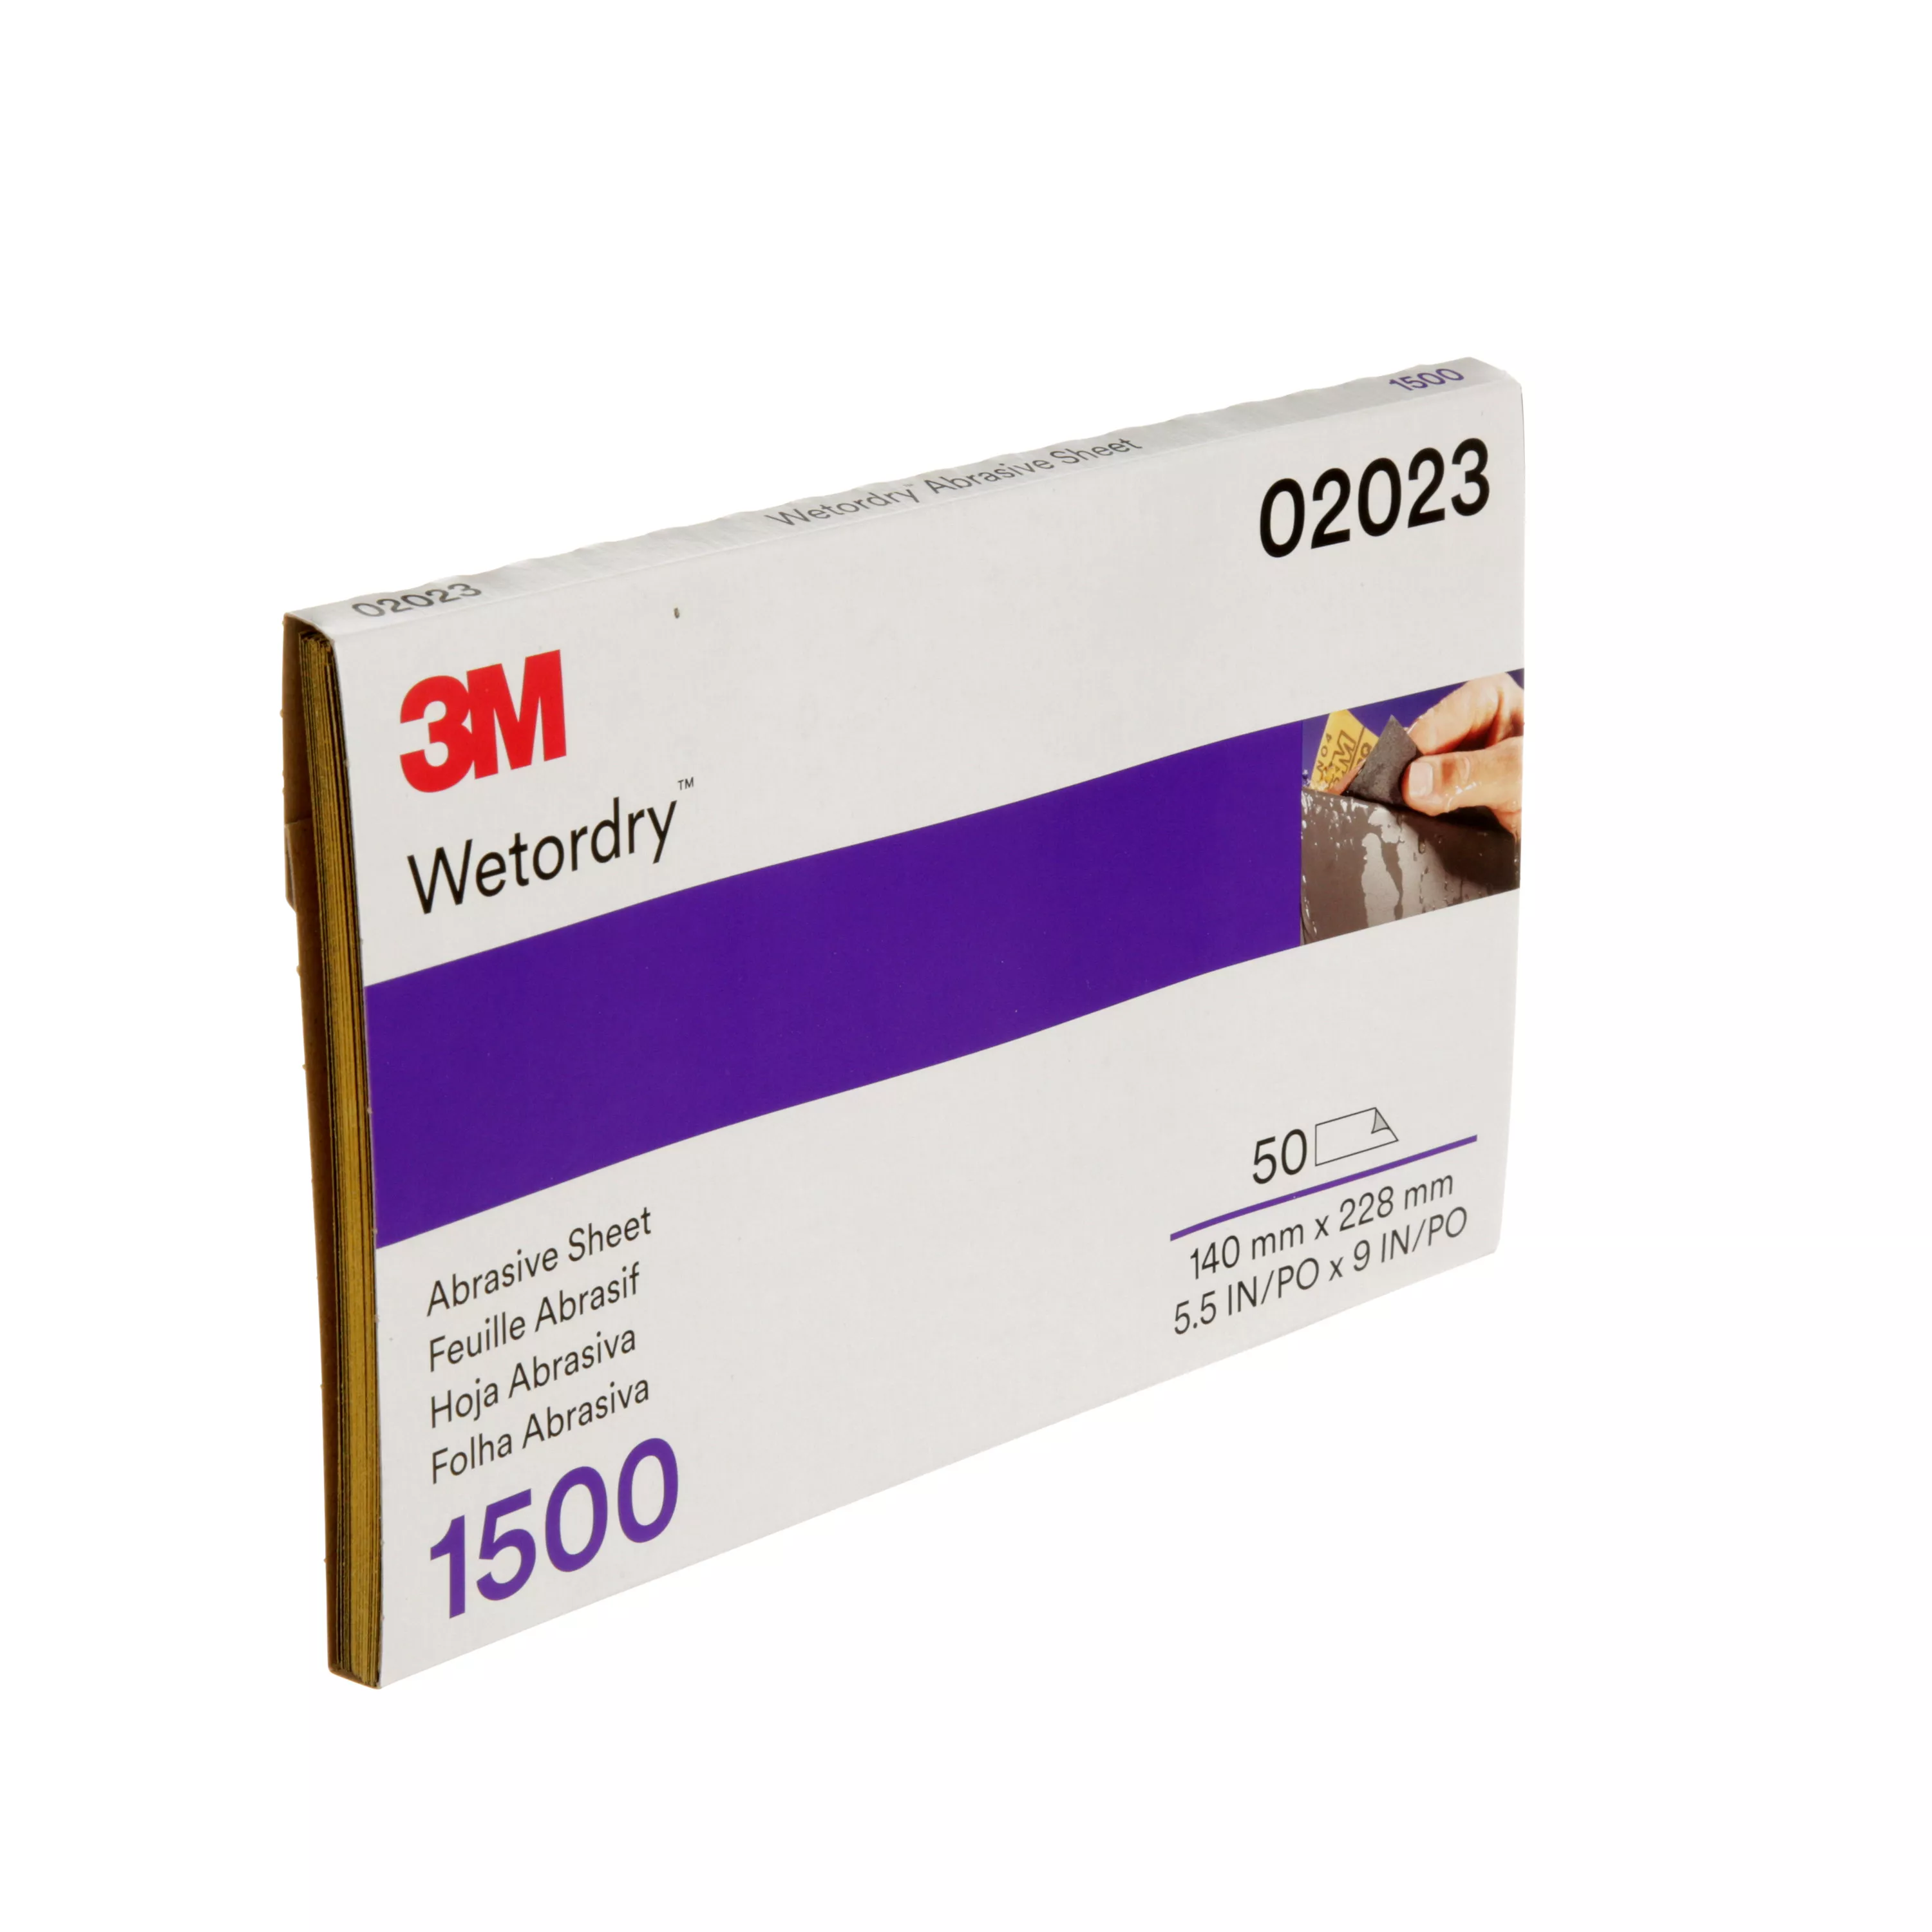 SKU 7000028329 | 3M™ Wetordry™ Abrasive Sheet 401Q